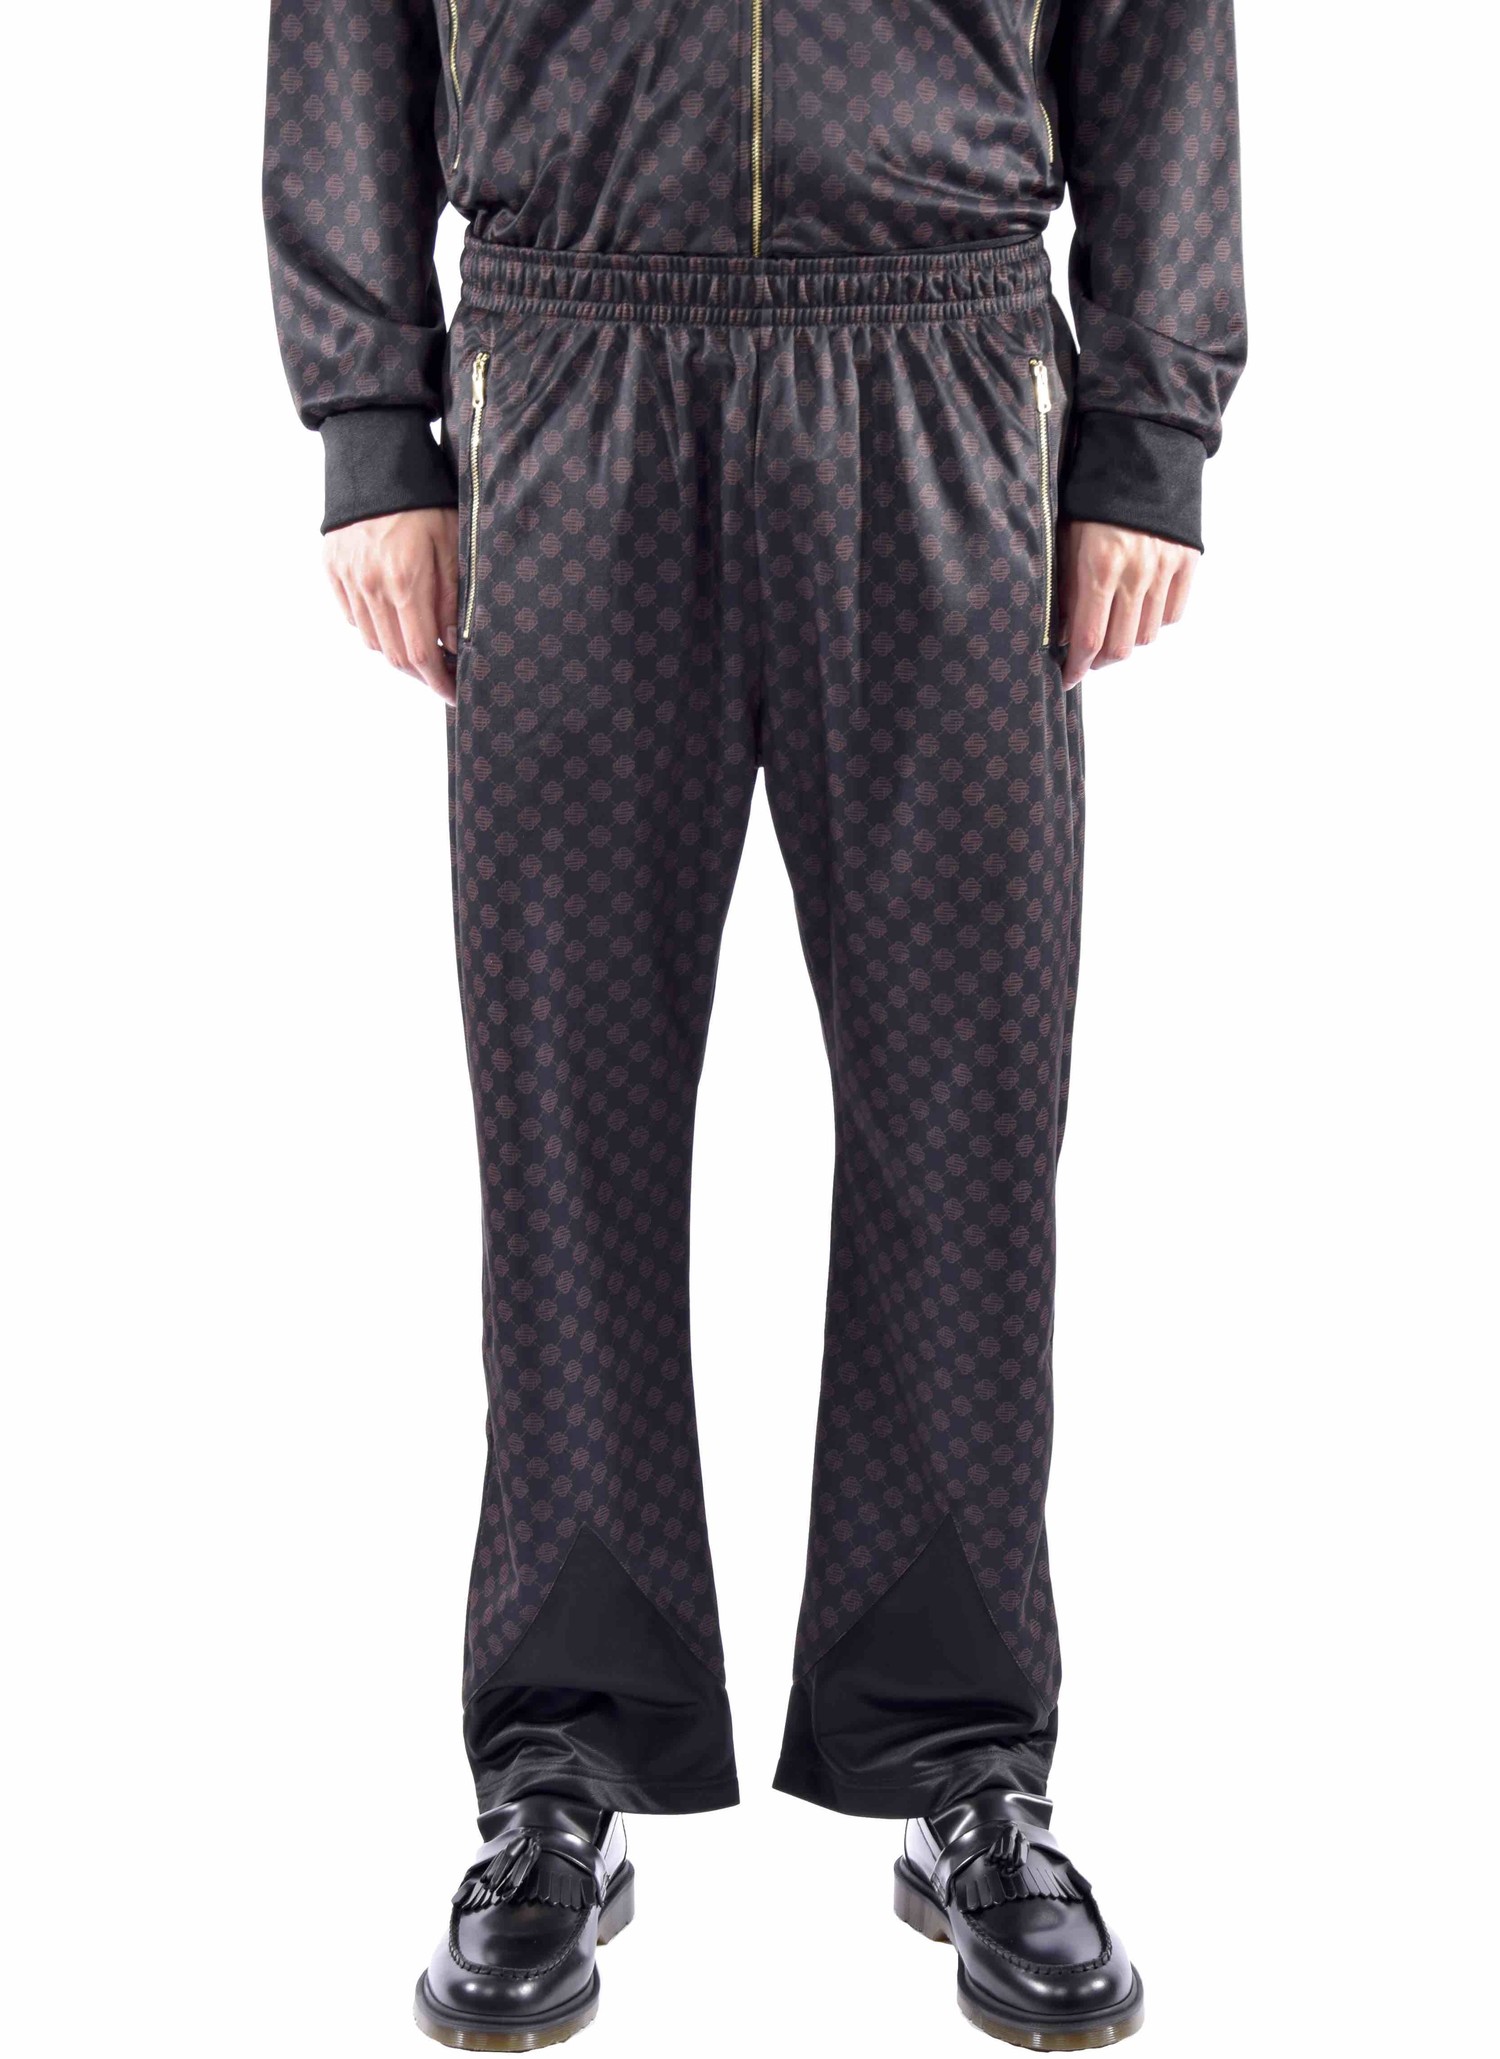 Louis Vuitton Reversible Damier Pants XL